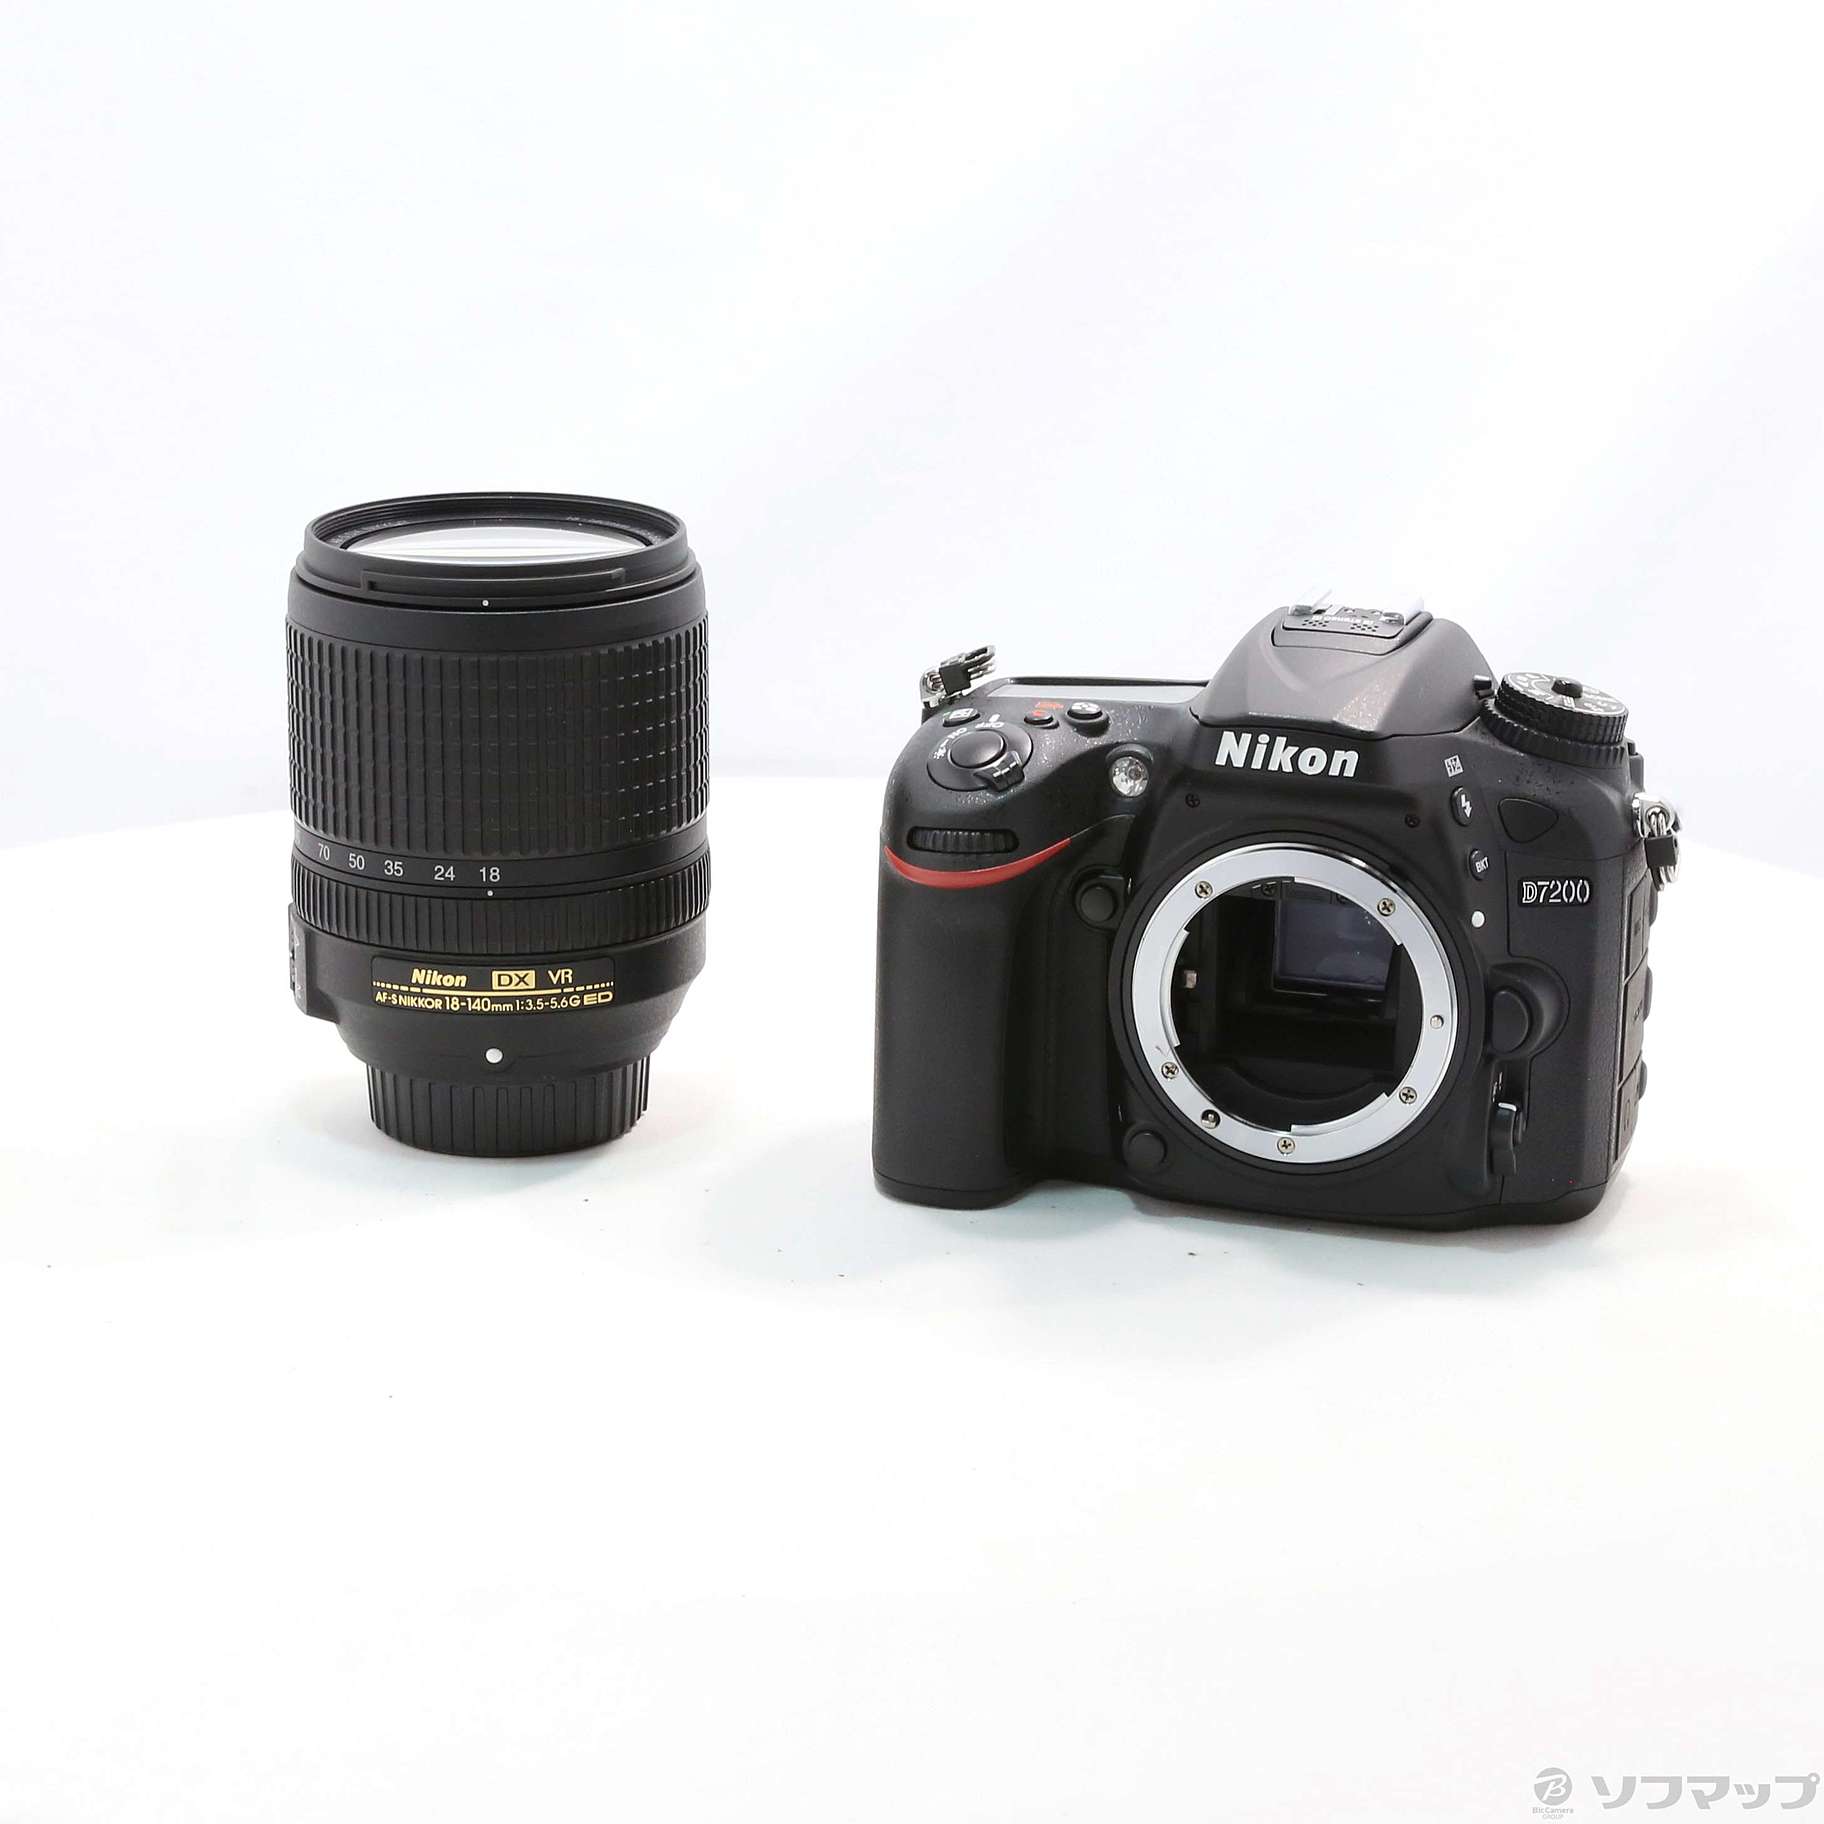 Nikon  デジタル一眼レフカメラ D7200 18-140 VR レンズキッ